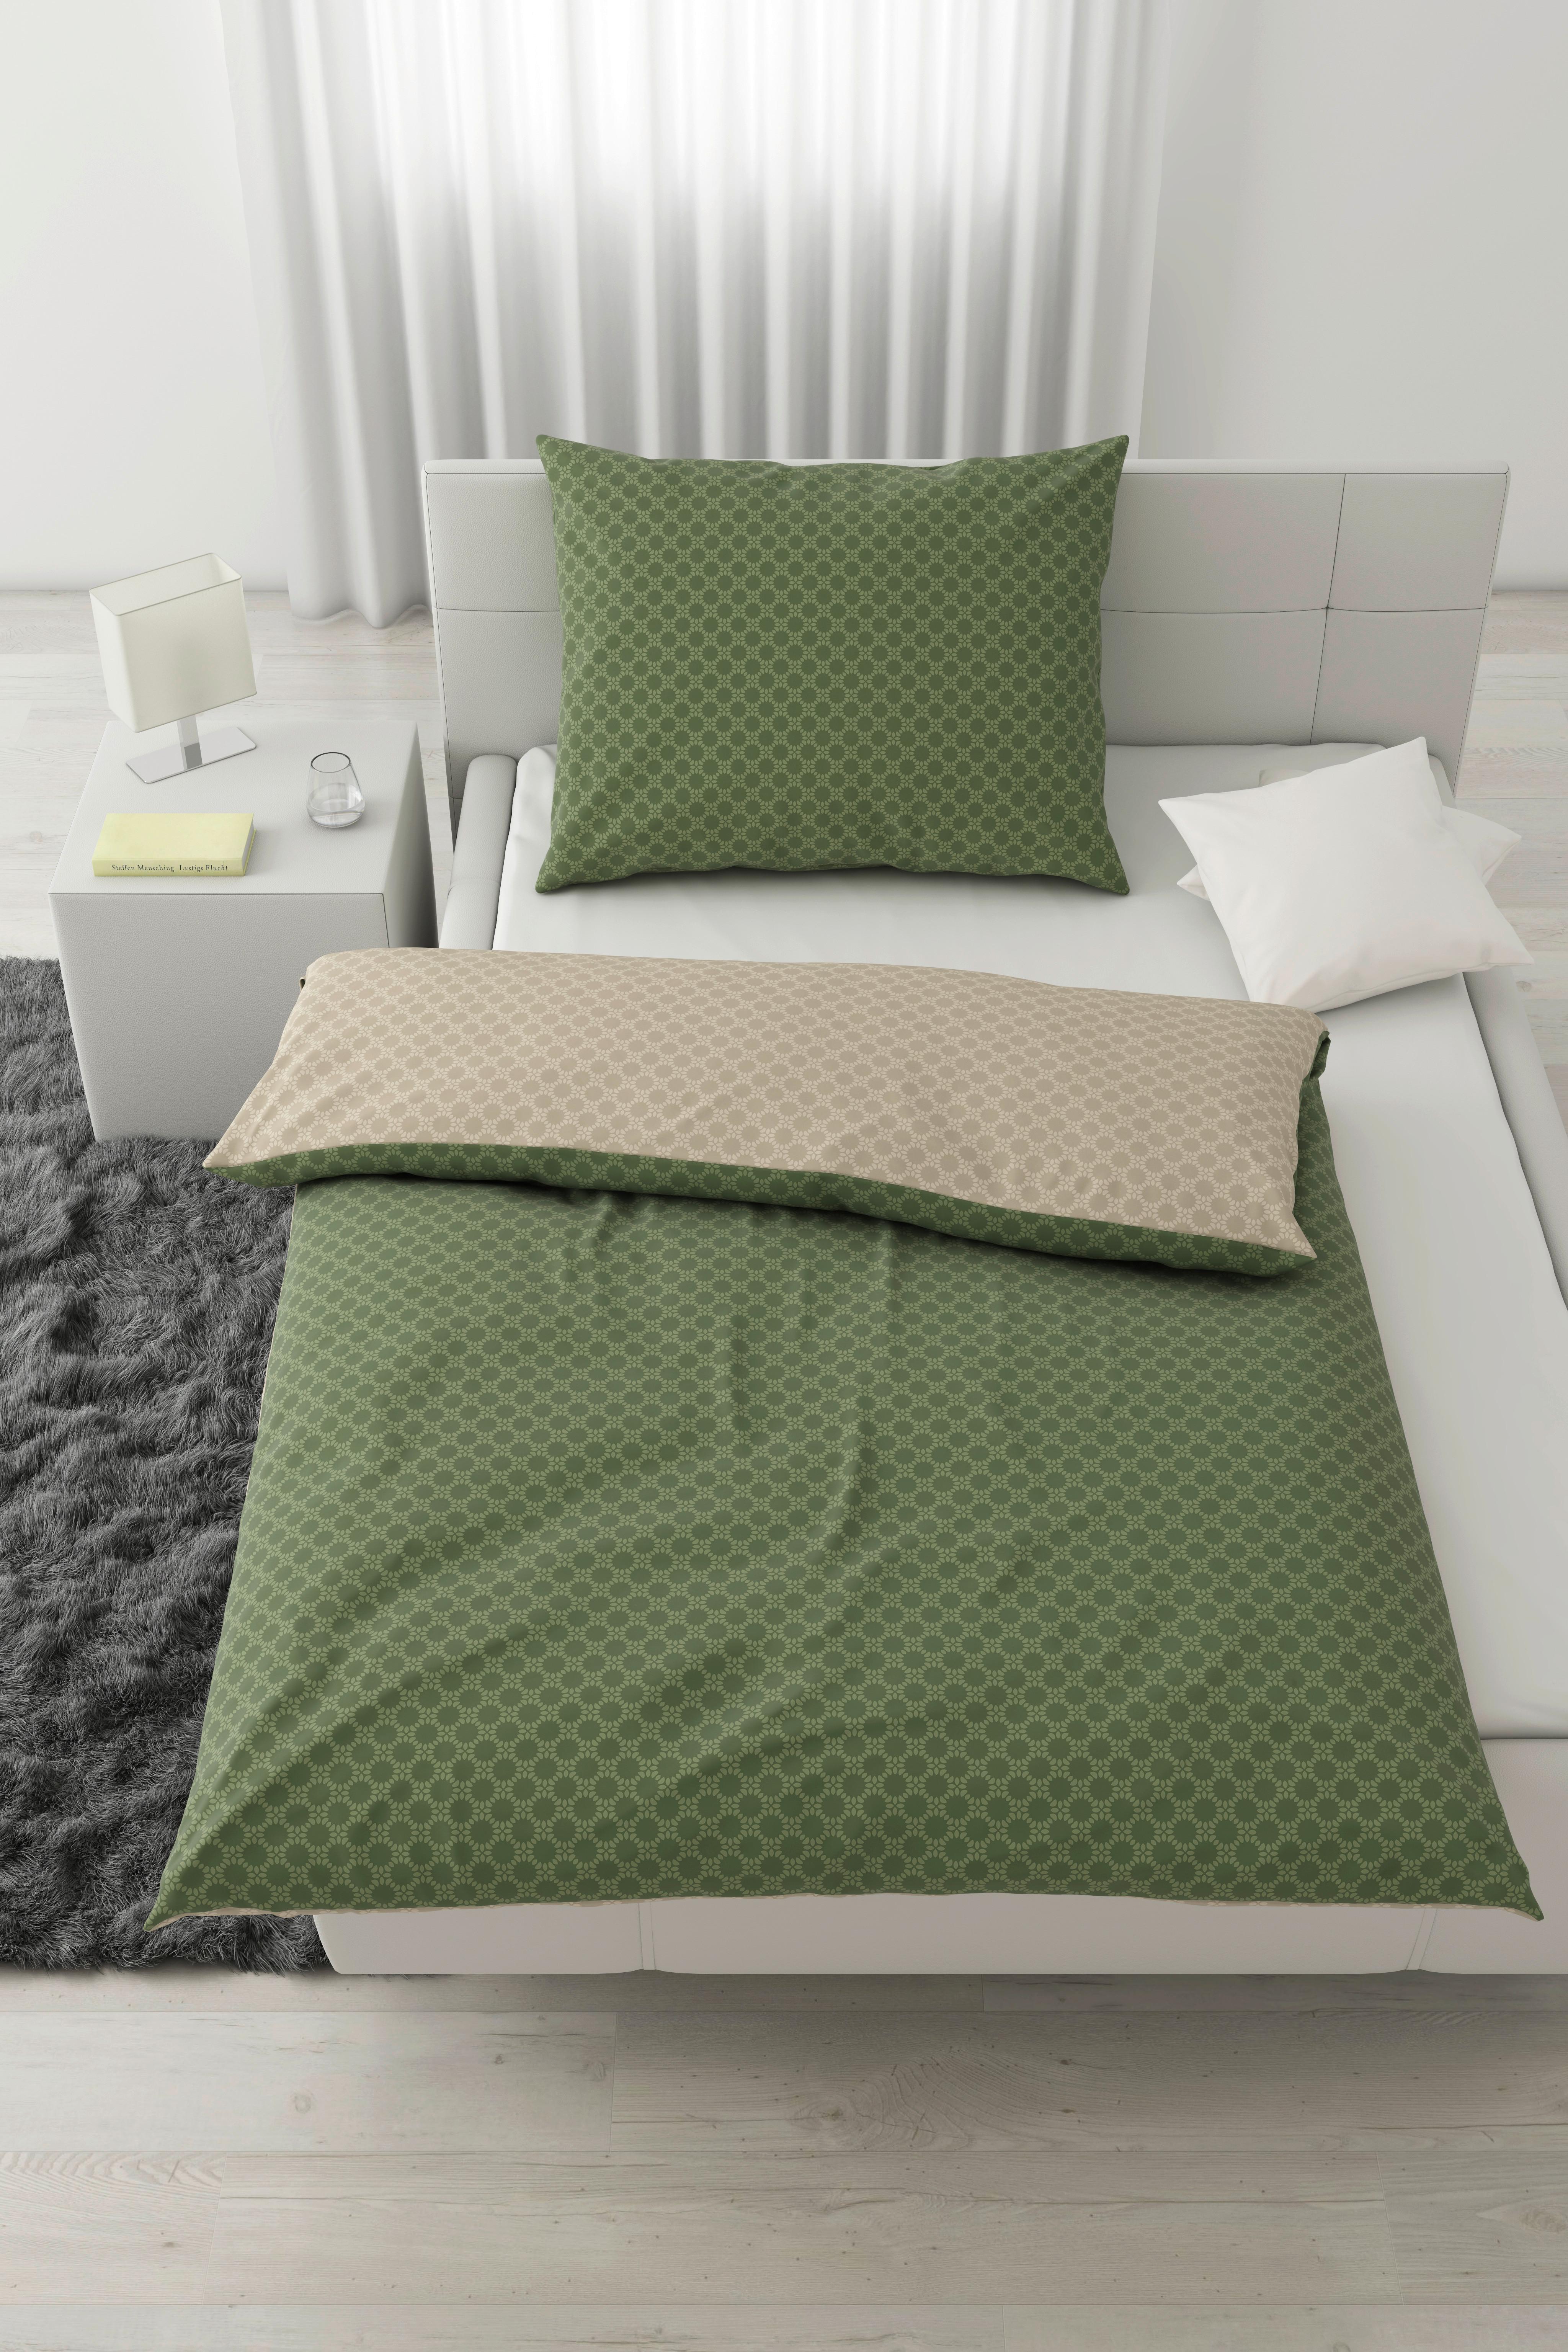 Posteľná Bielizeň Mici, 140/200cm - zelená/béžová, Konvenčný, textil (140/200cm) - Modern Living